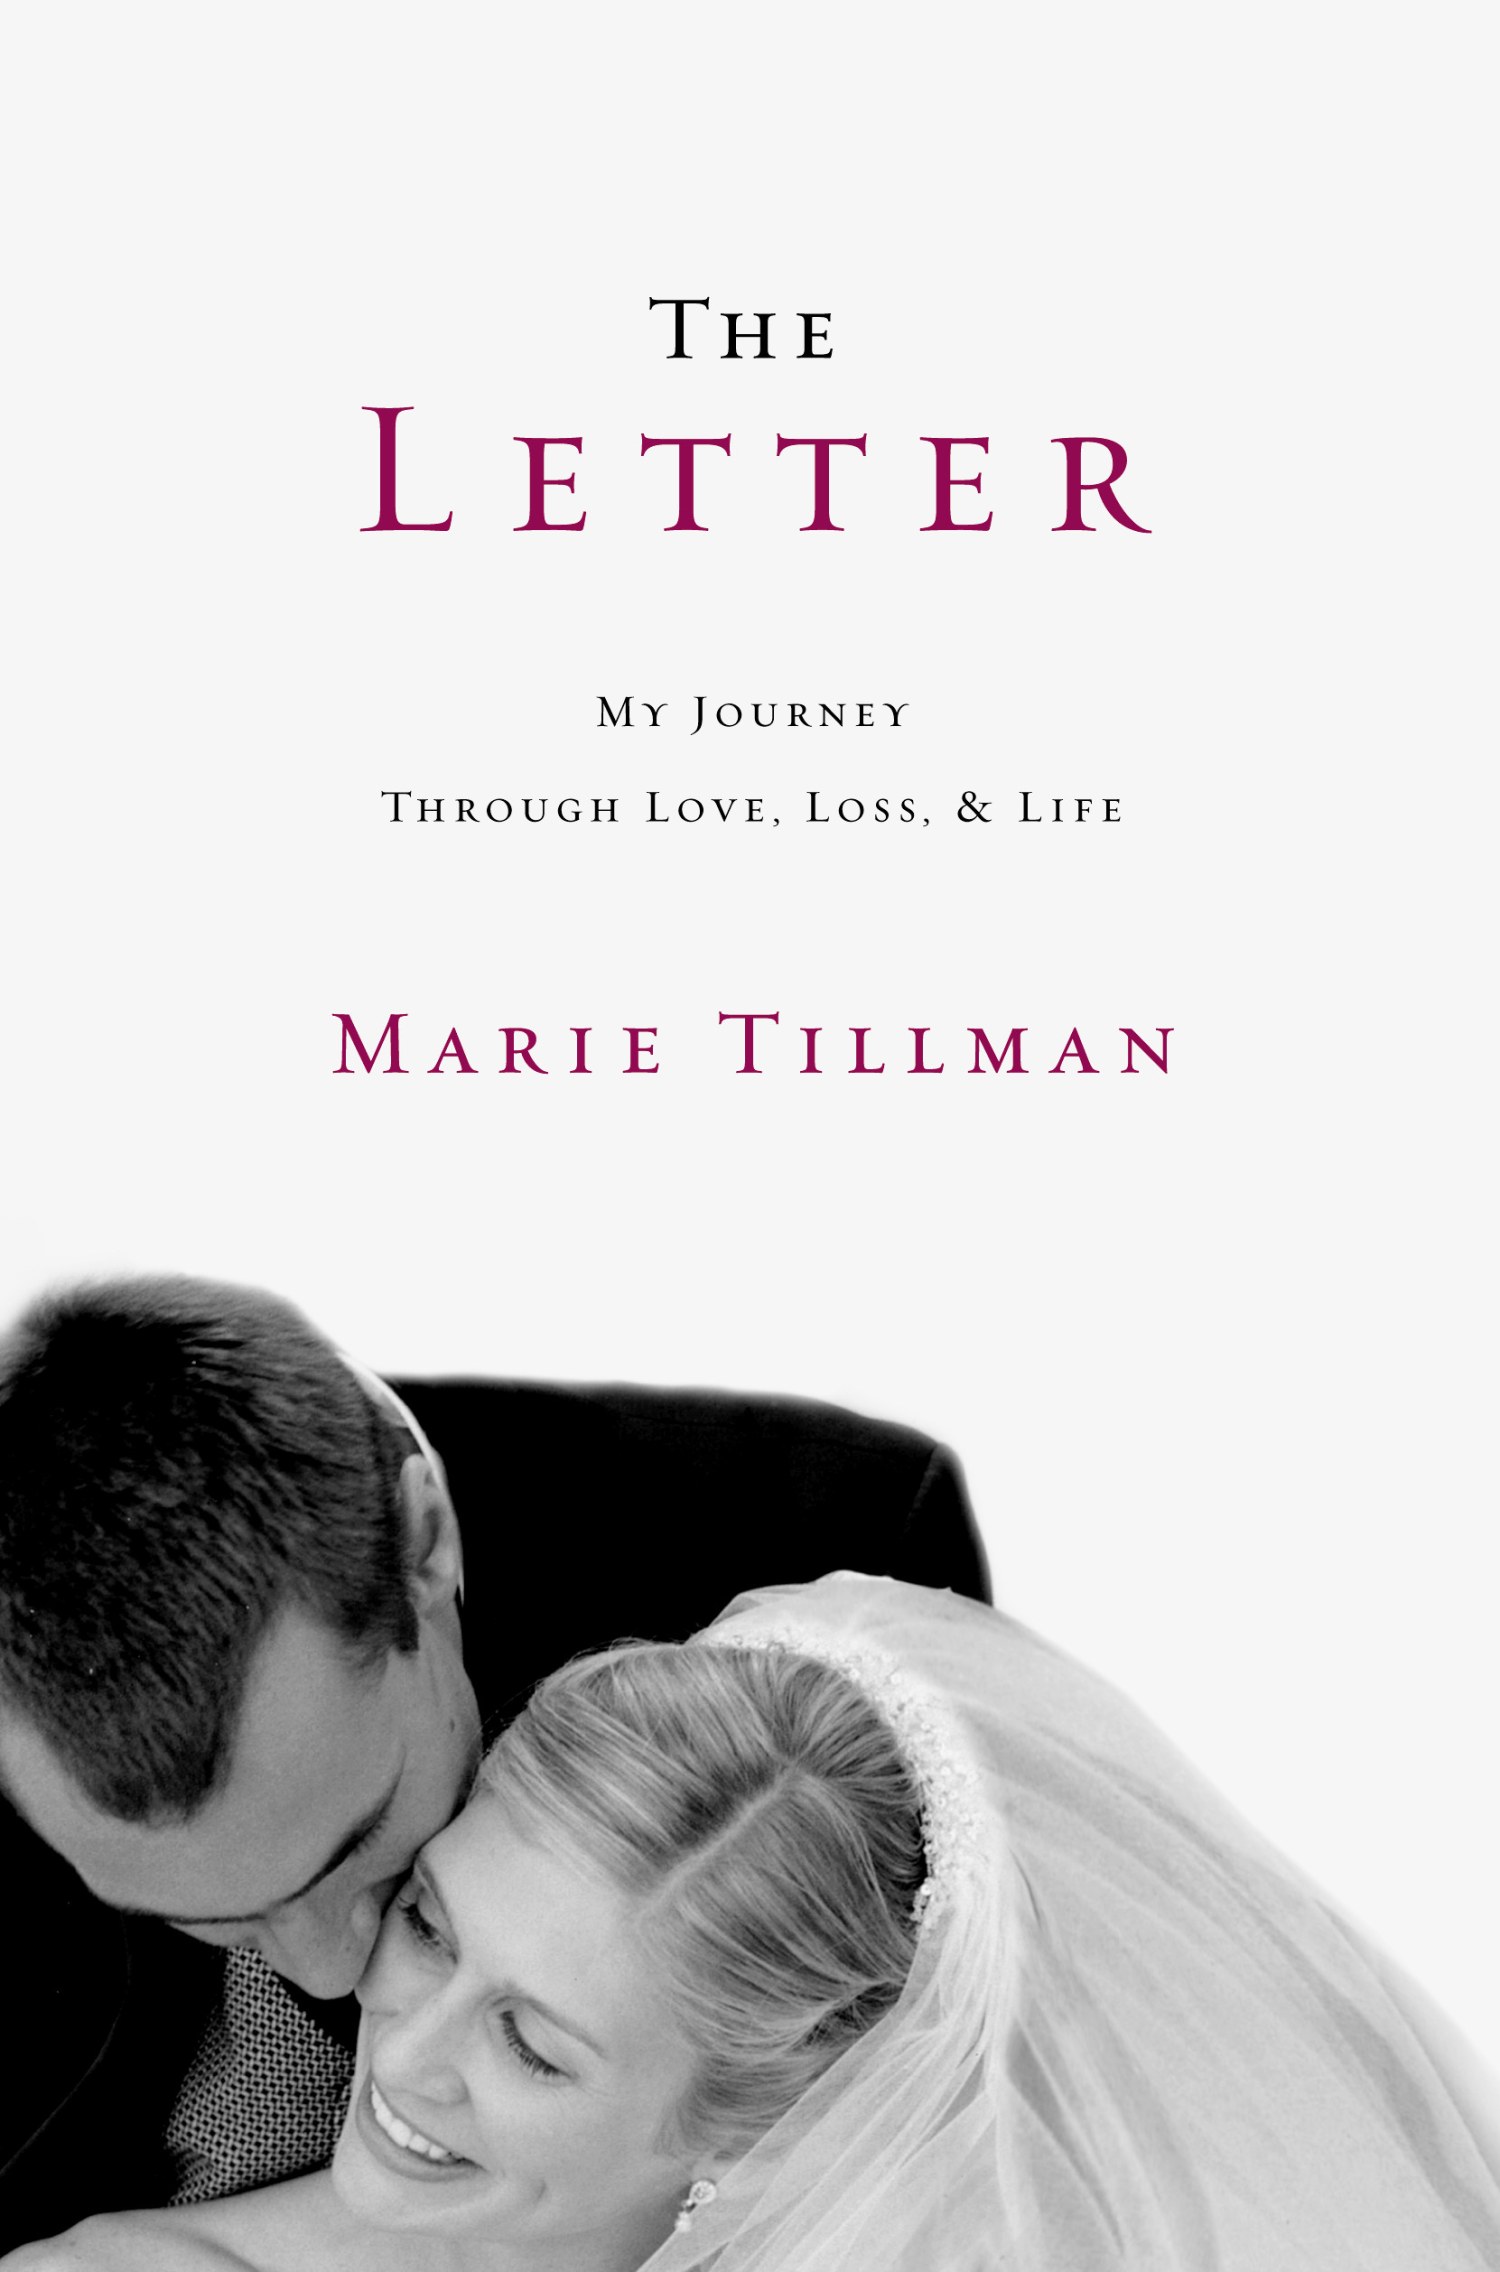 Who is Pat Tillman's wife Marie Tillman?